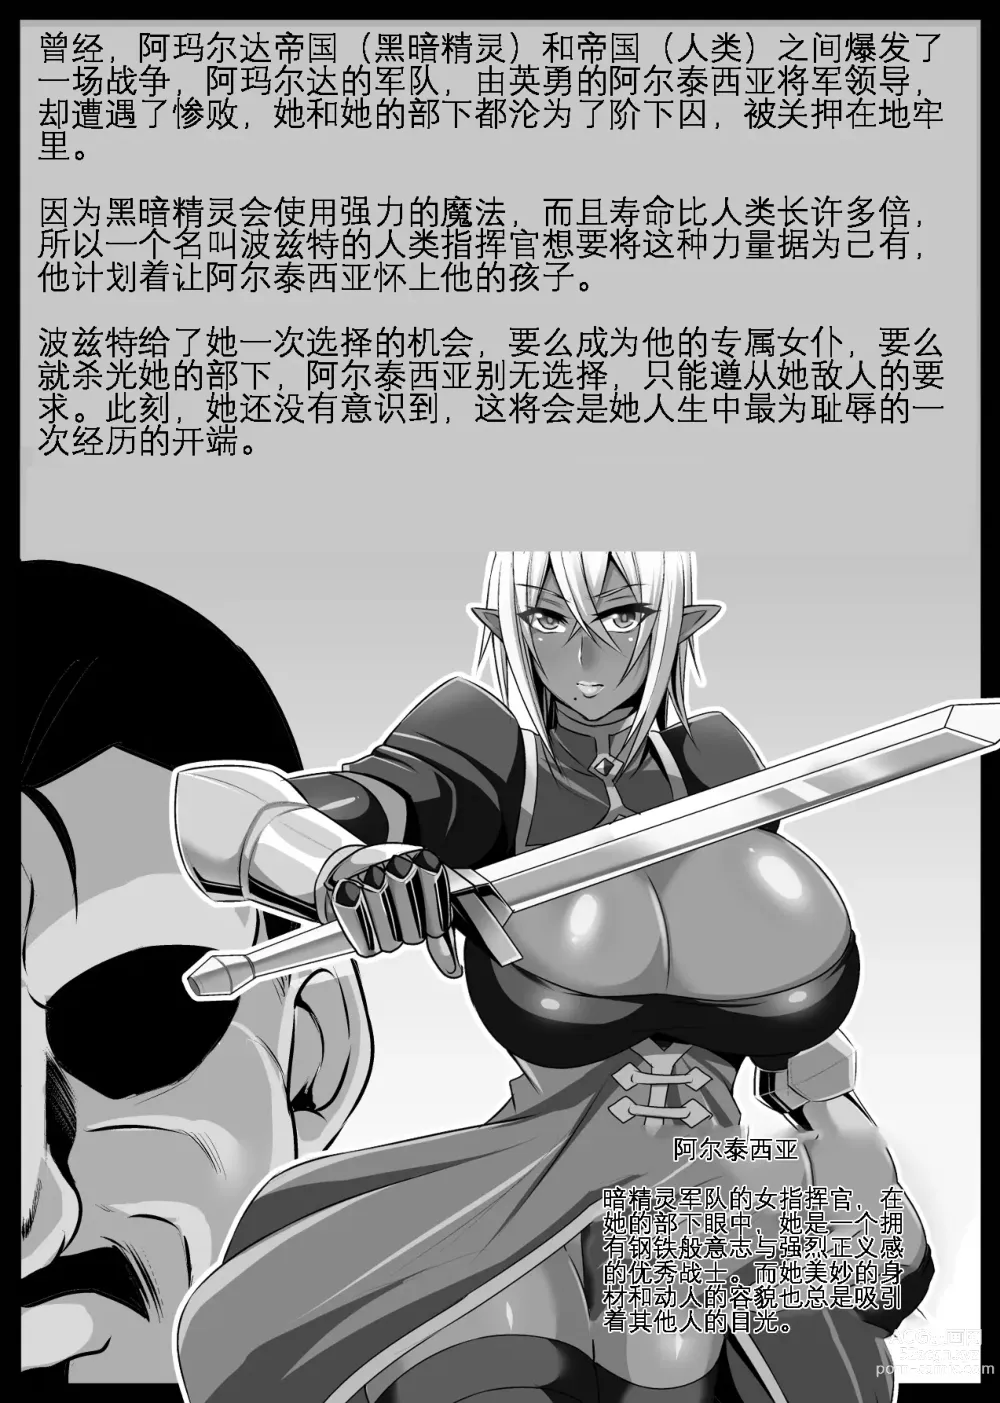 Page 3 of doujinshi 女将军阿尔泰西亚的怀孕调教记录